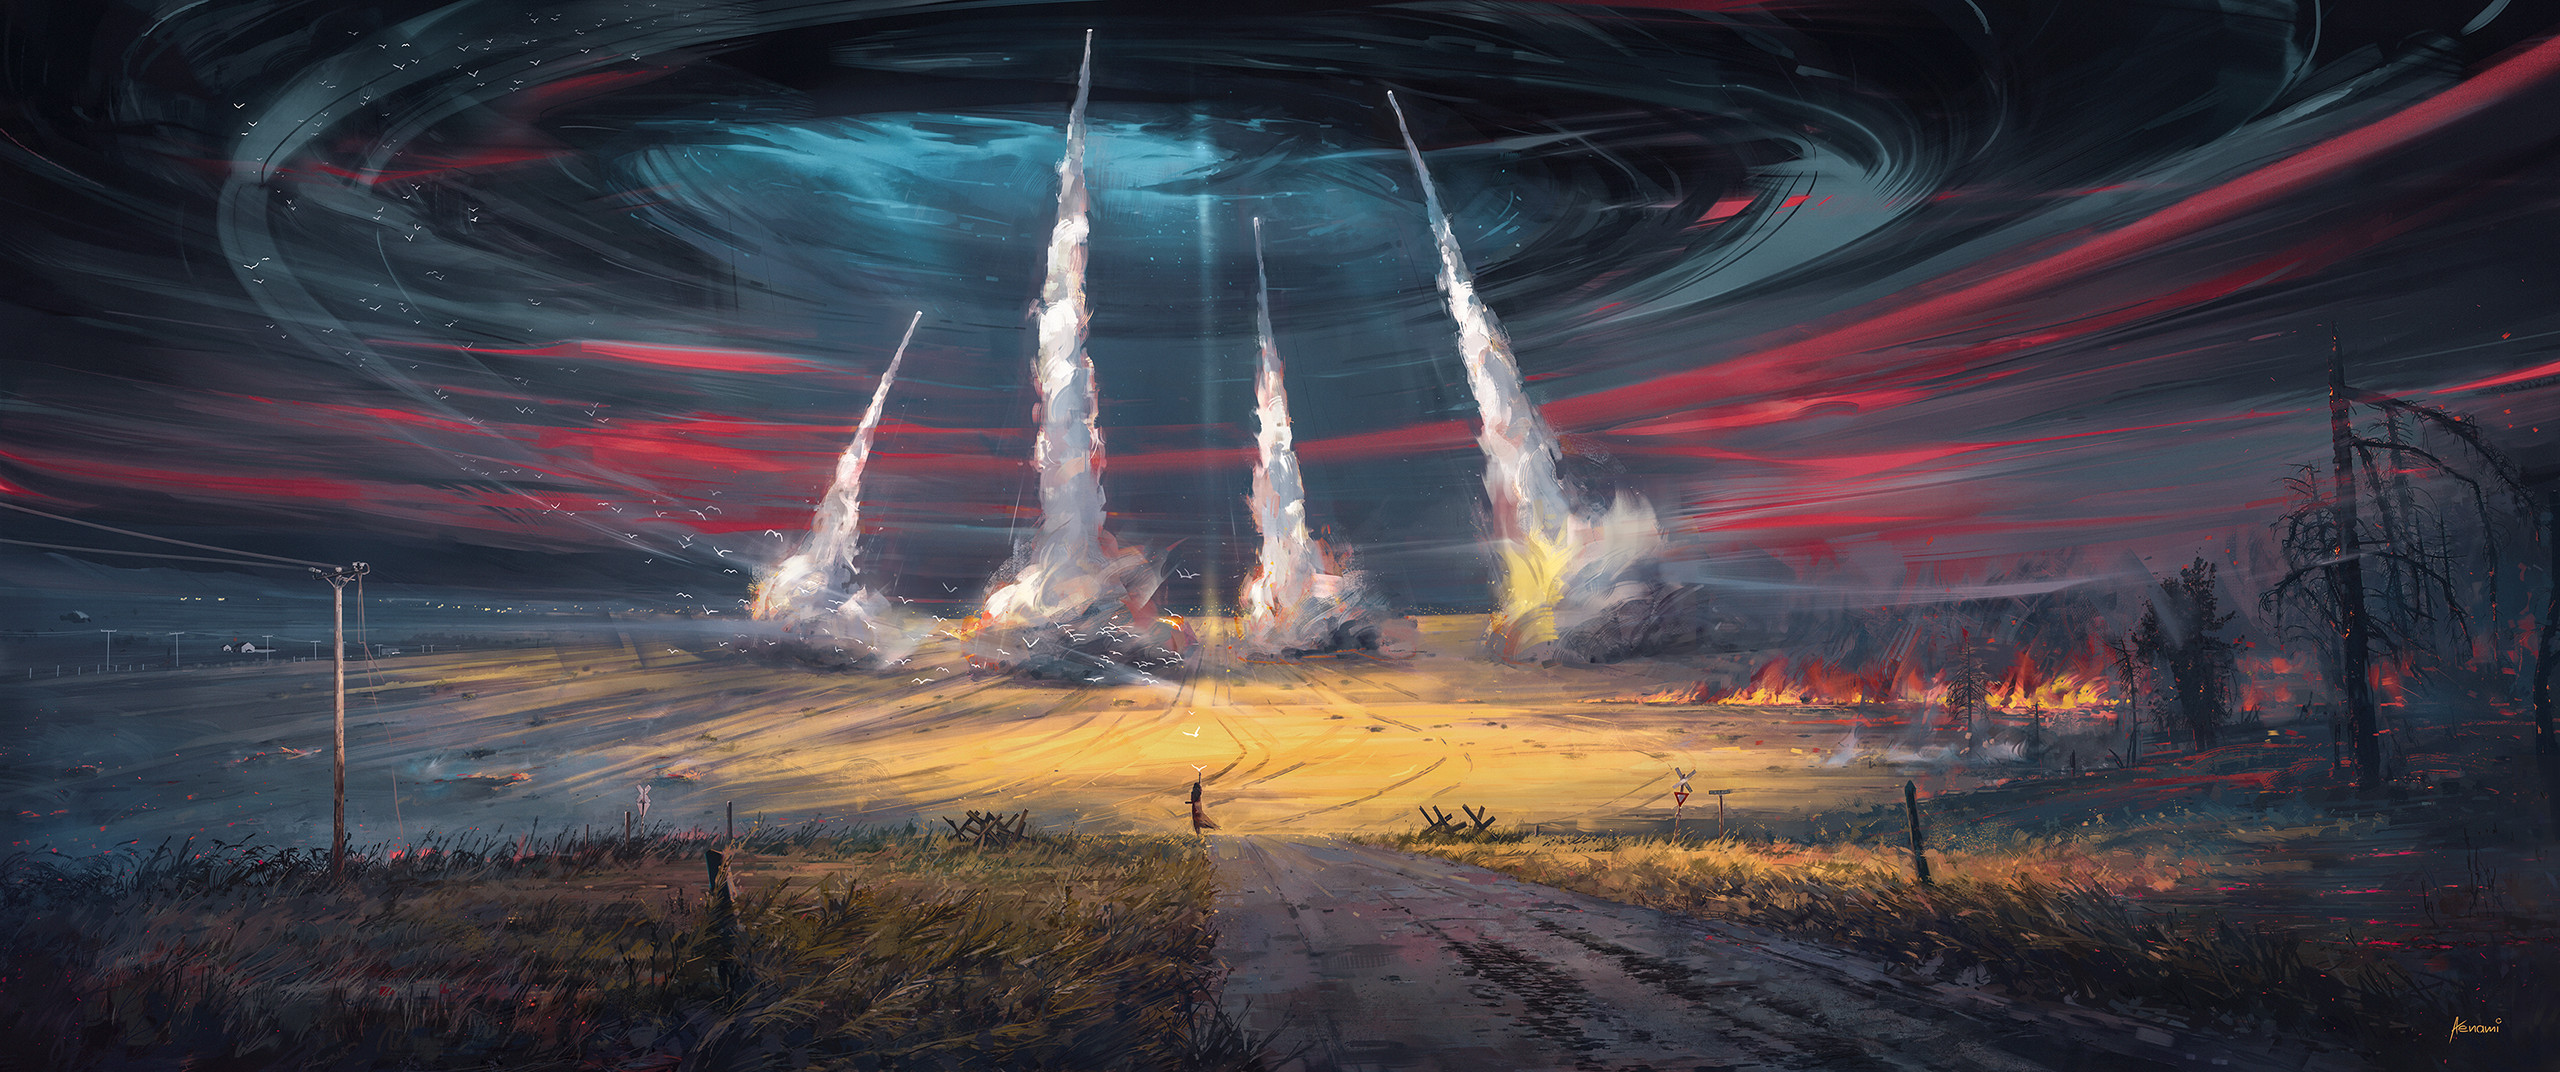 Aenami Digital Art Artwork Illustration Landscape Nature Field Missiles Launching Smoke 2560x1072